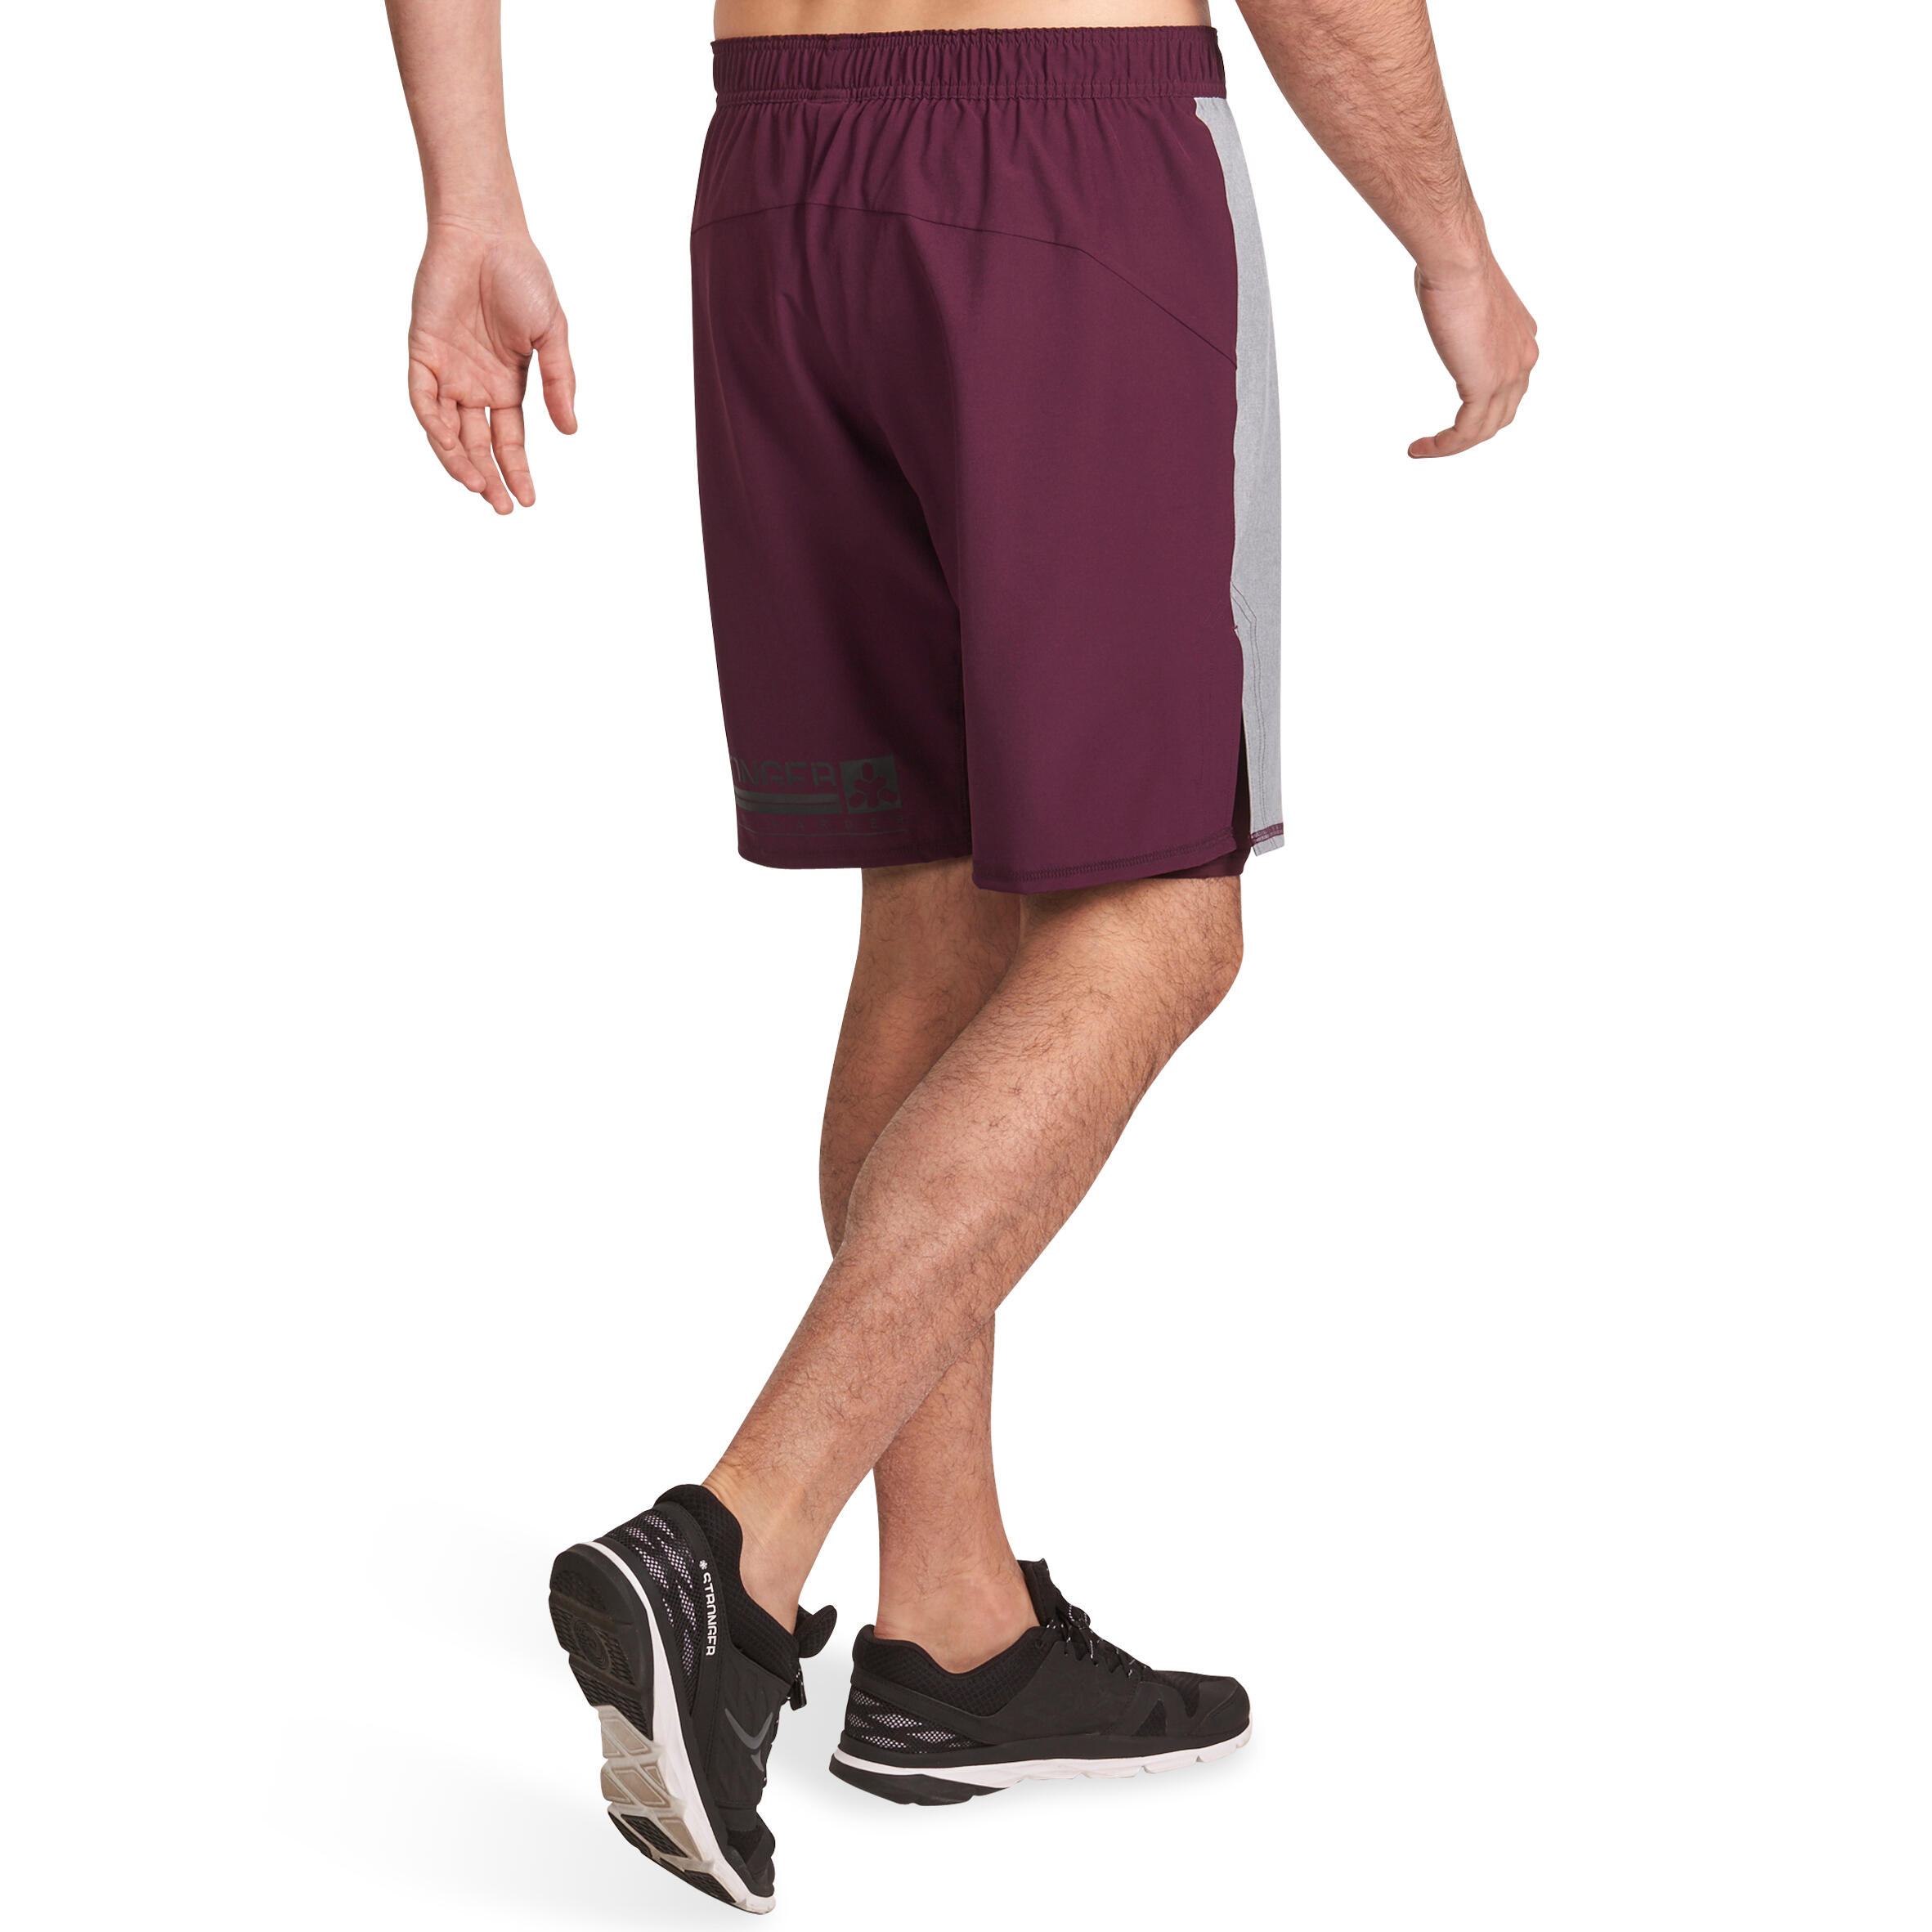 Muscle Xtrem Bodybuilding Shorts - Purple 4/14